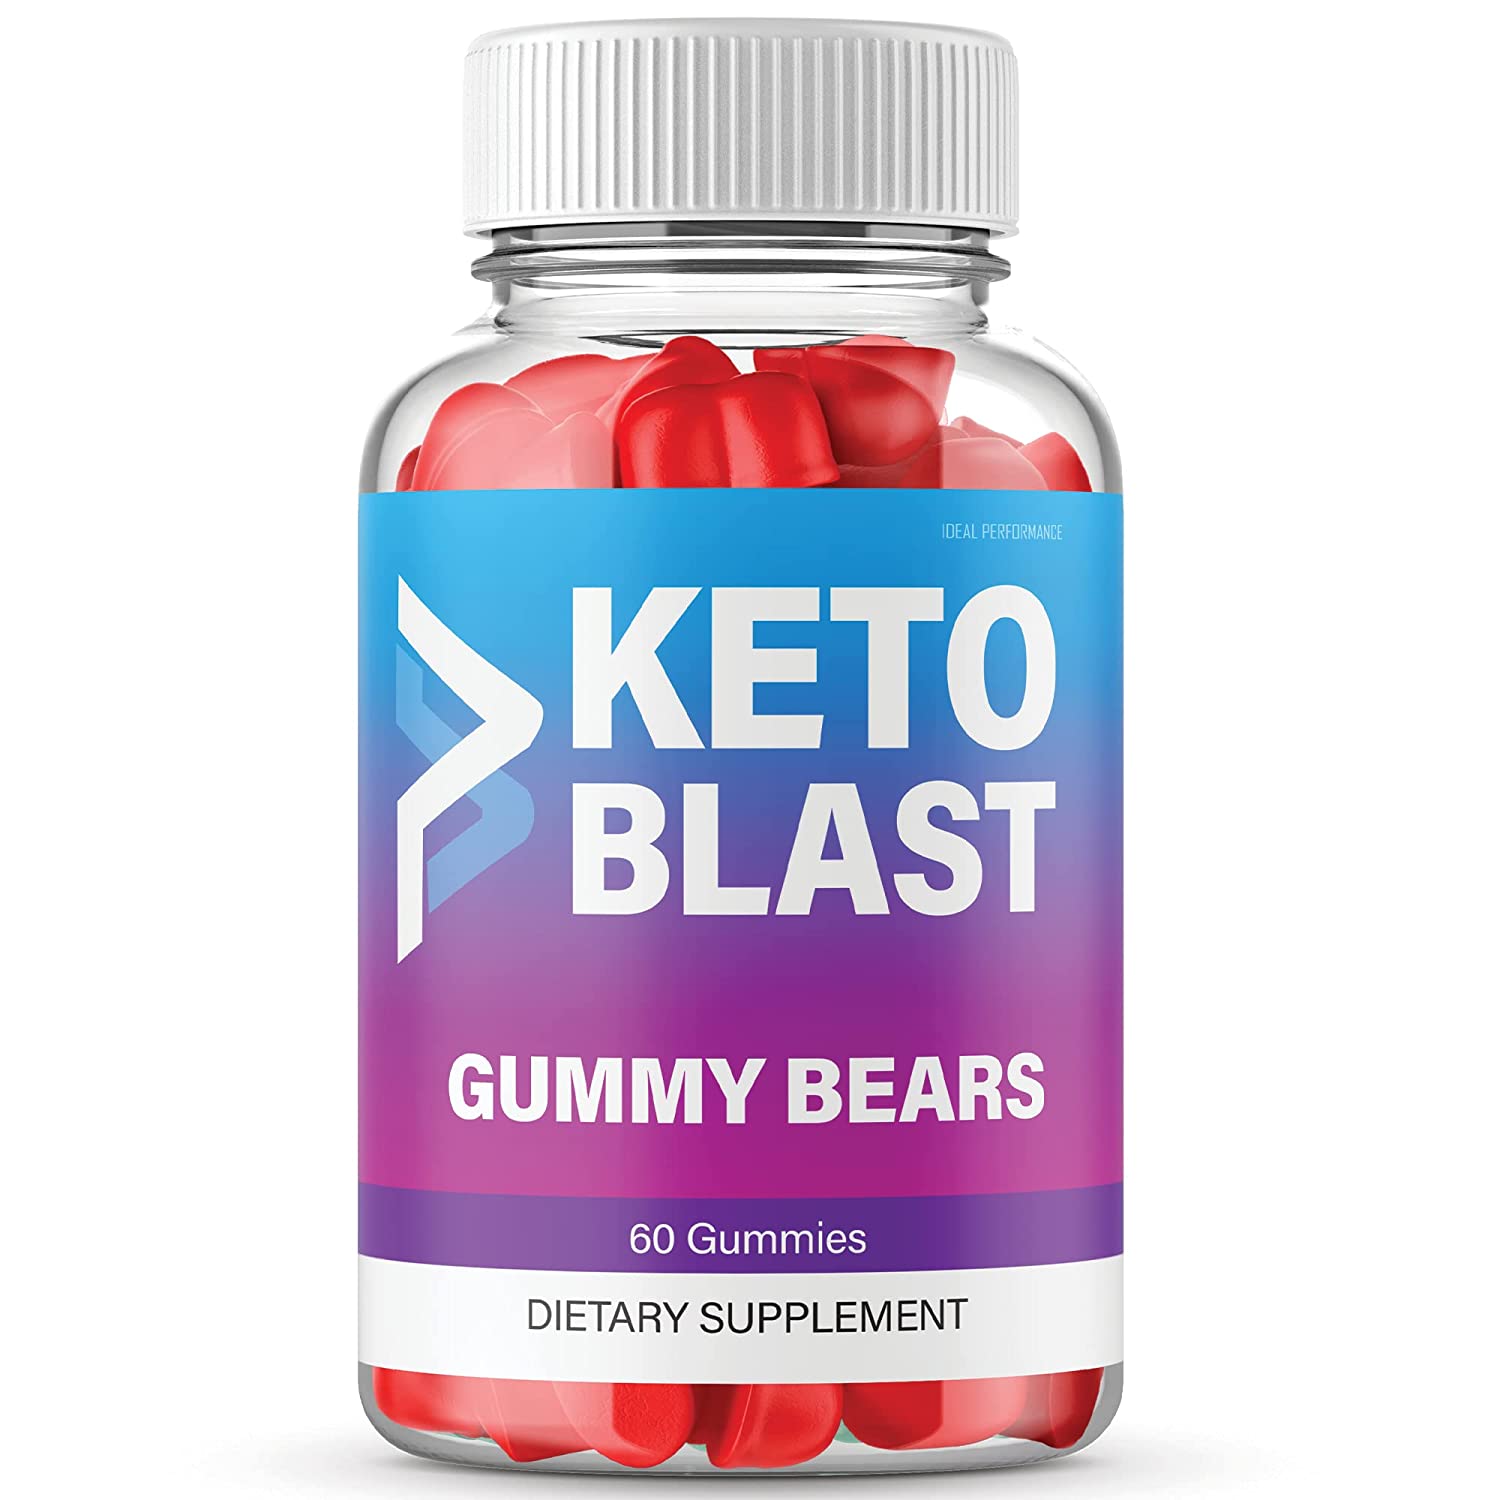 Keto Blast Gummy Bears Review